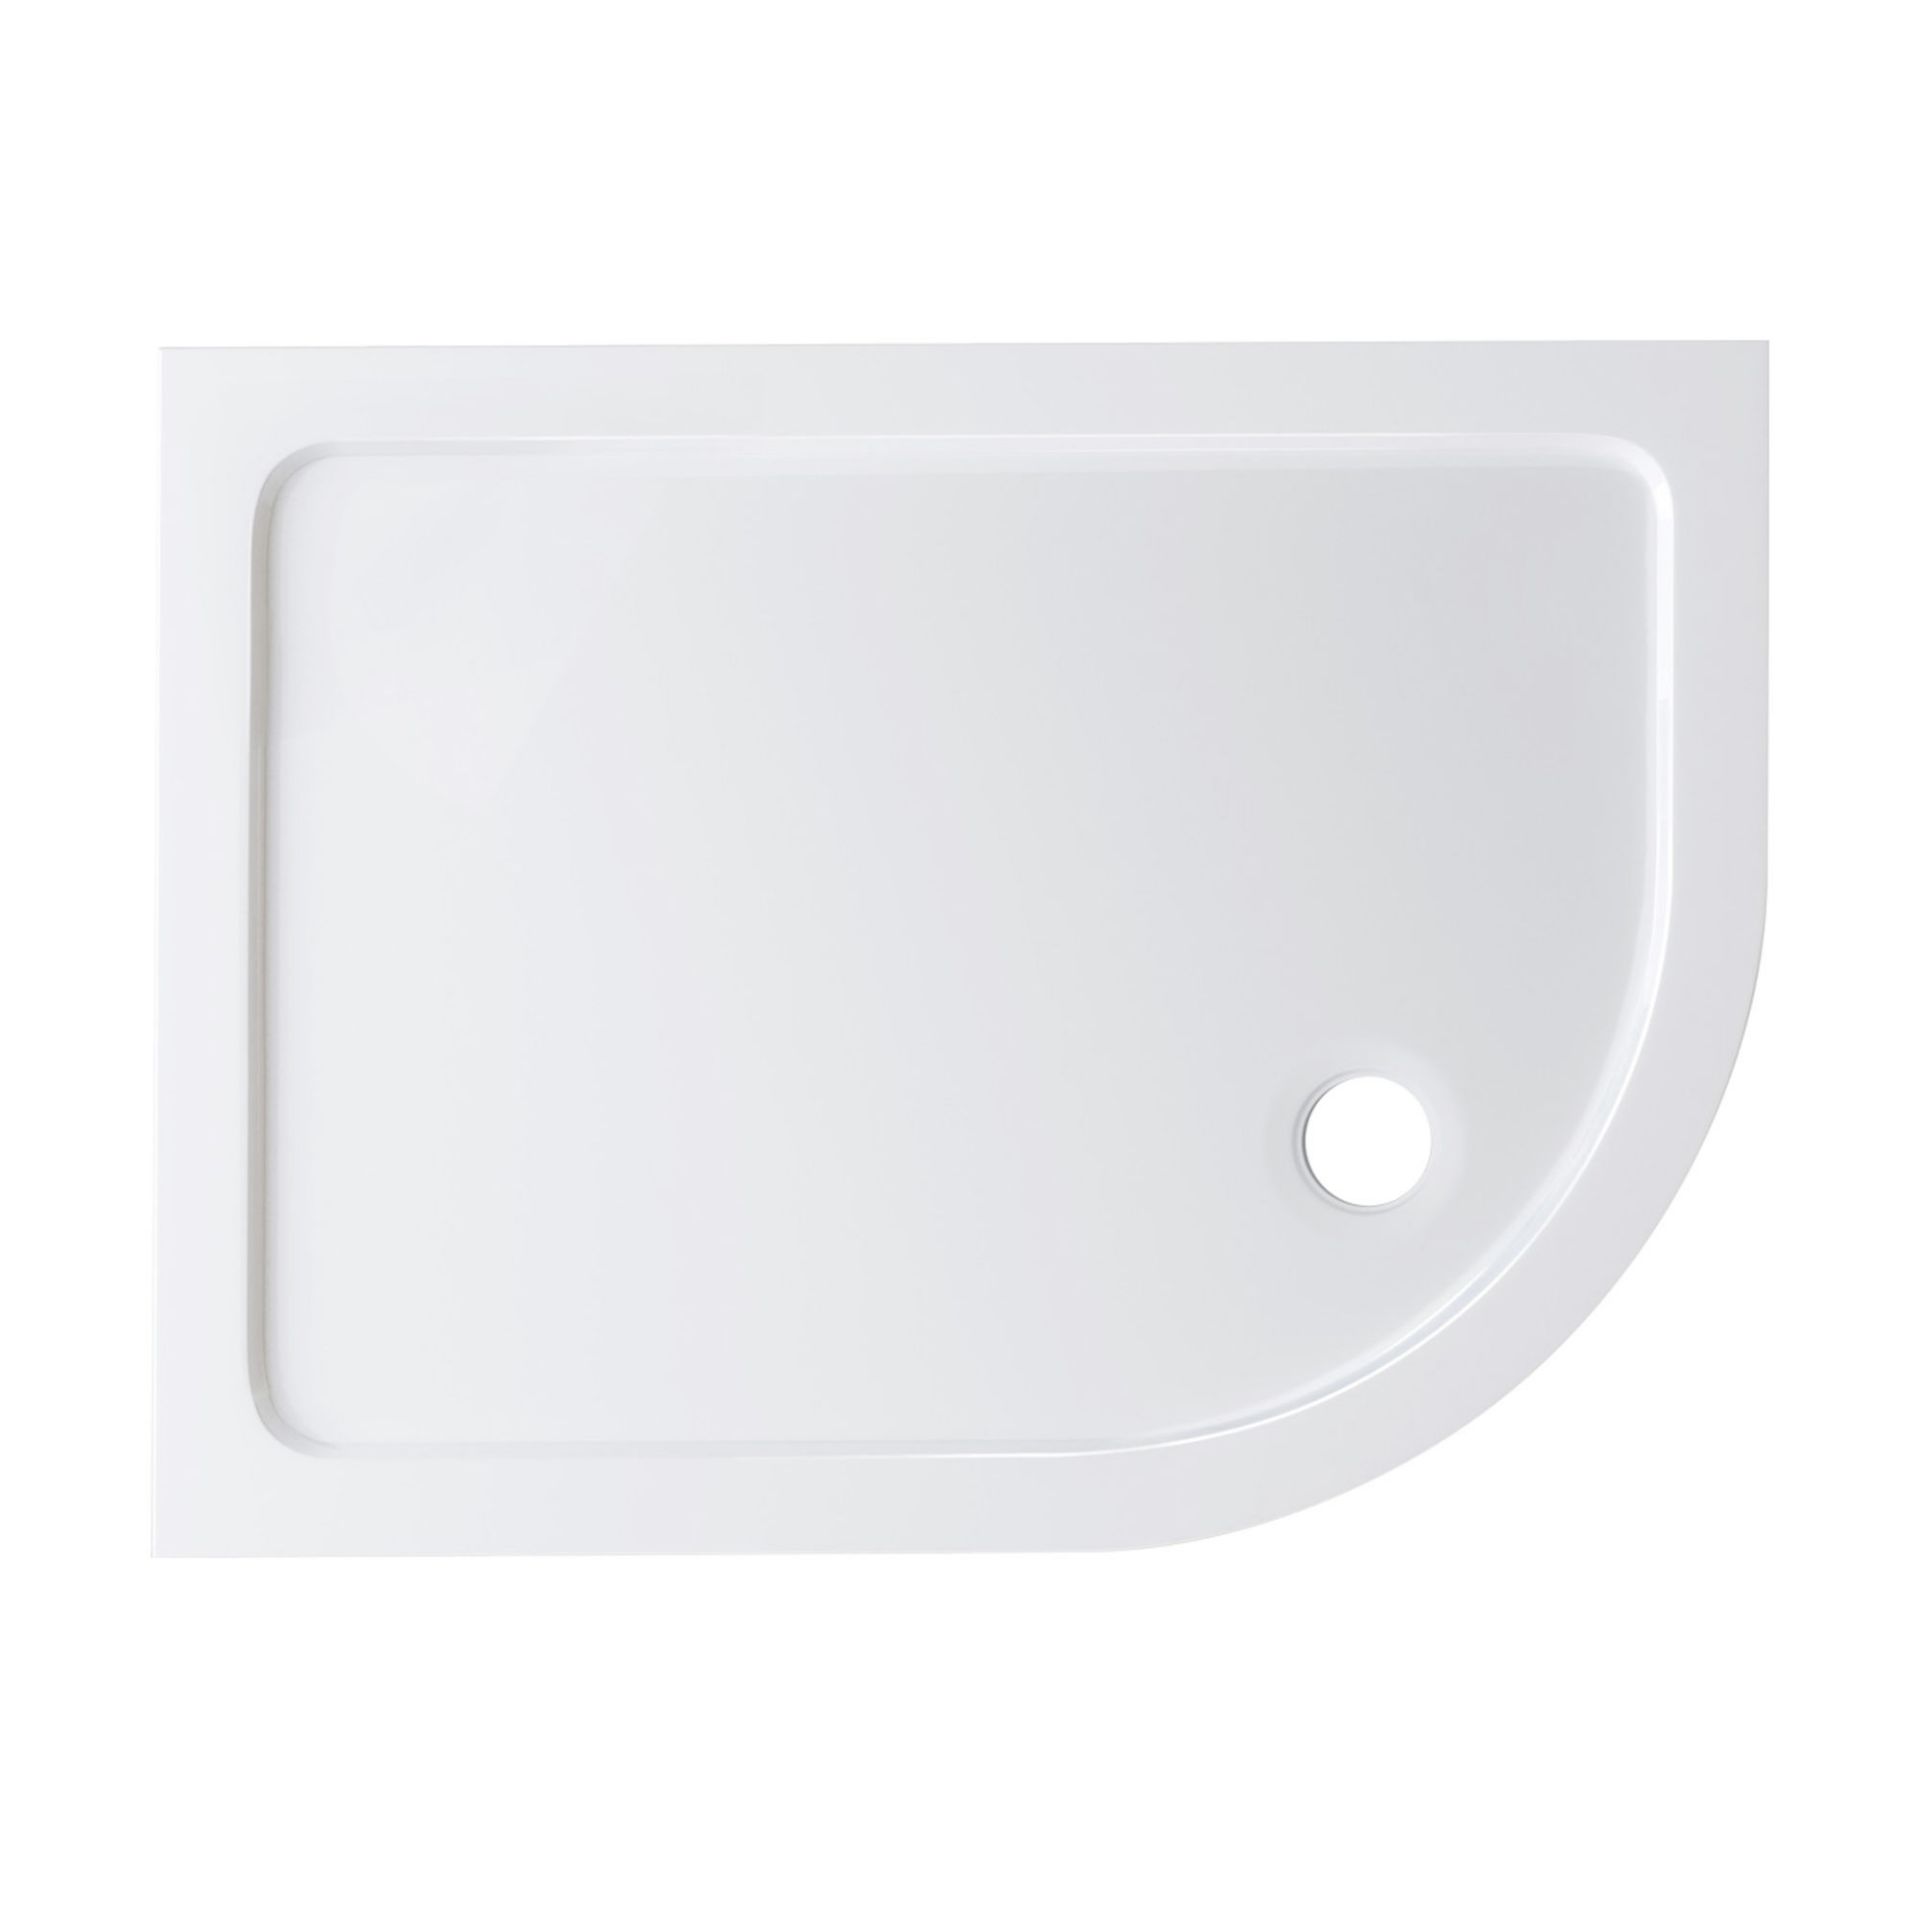 (XS77) 1200x800mm Offset Quadrant Ultra Slim Stone Shower Tray - Right. Low profile ultra slim